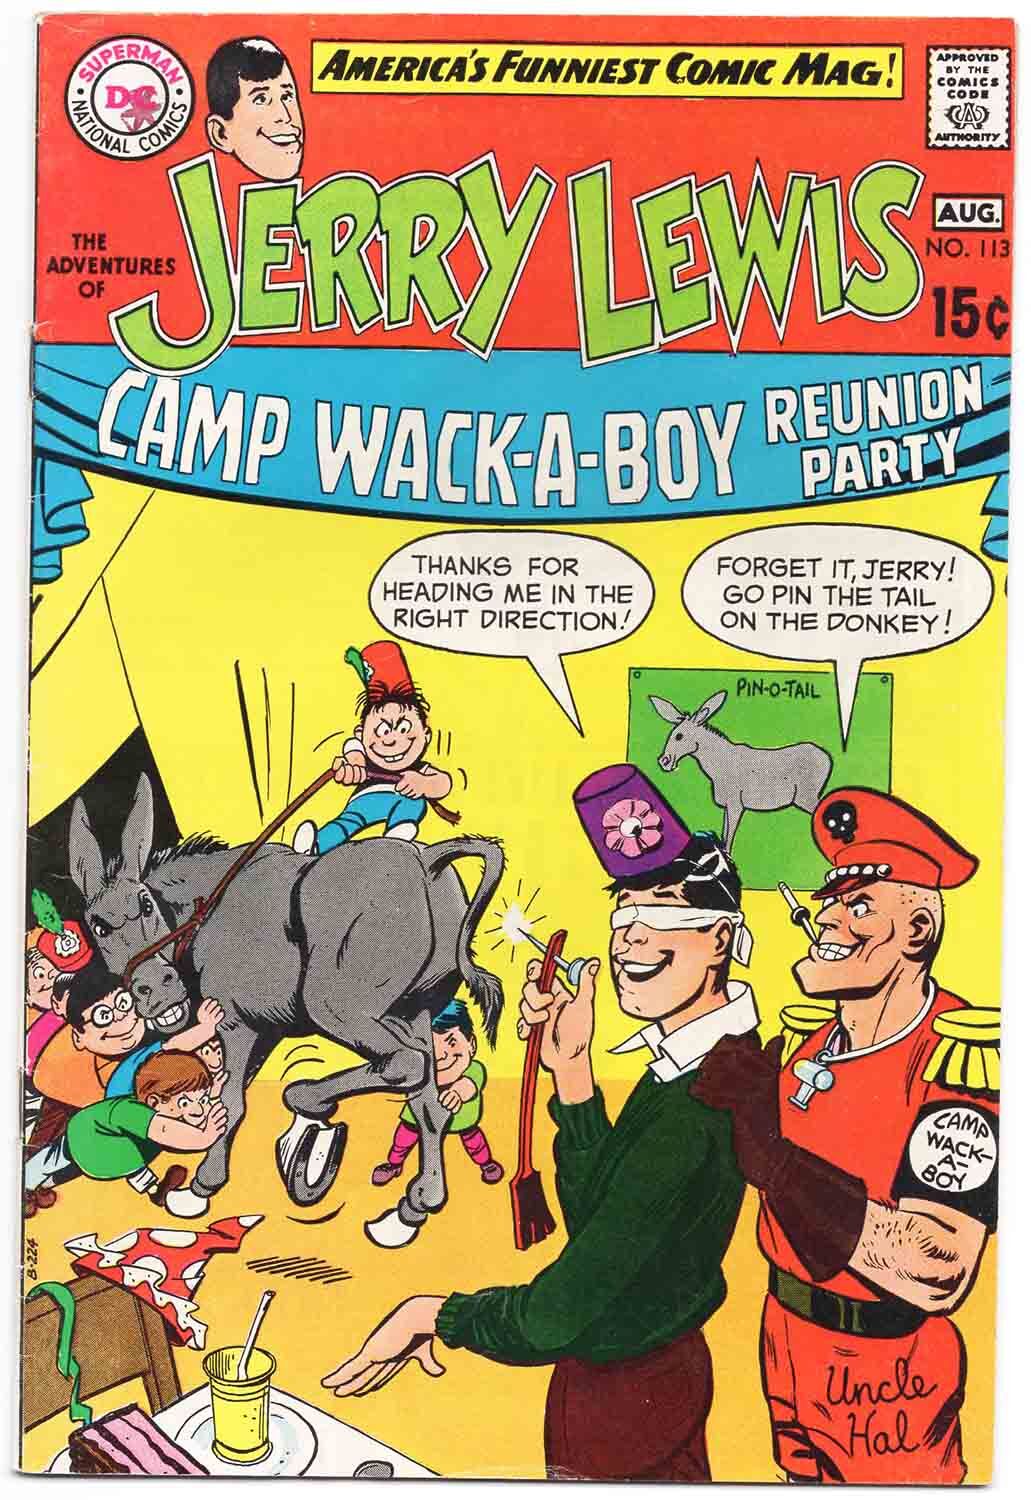 Adventures of Jerry Lewis #113